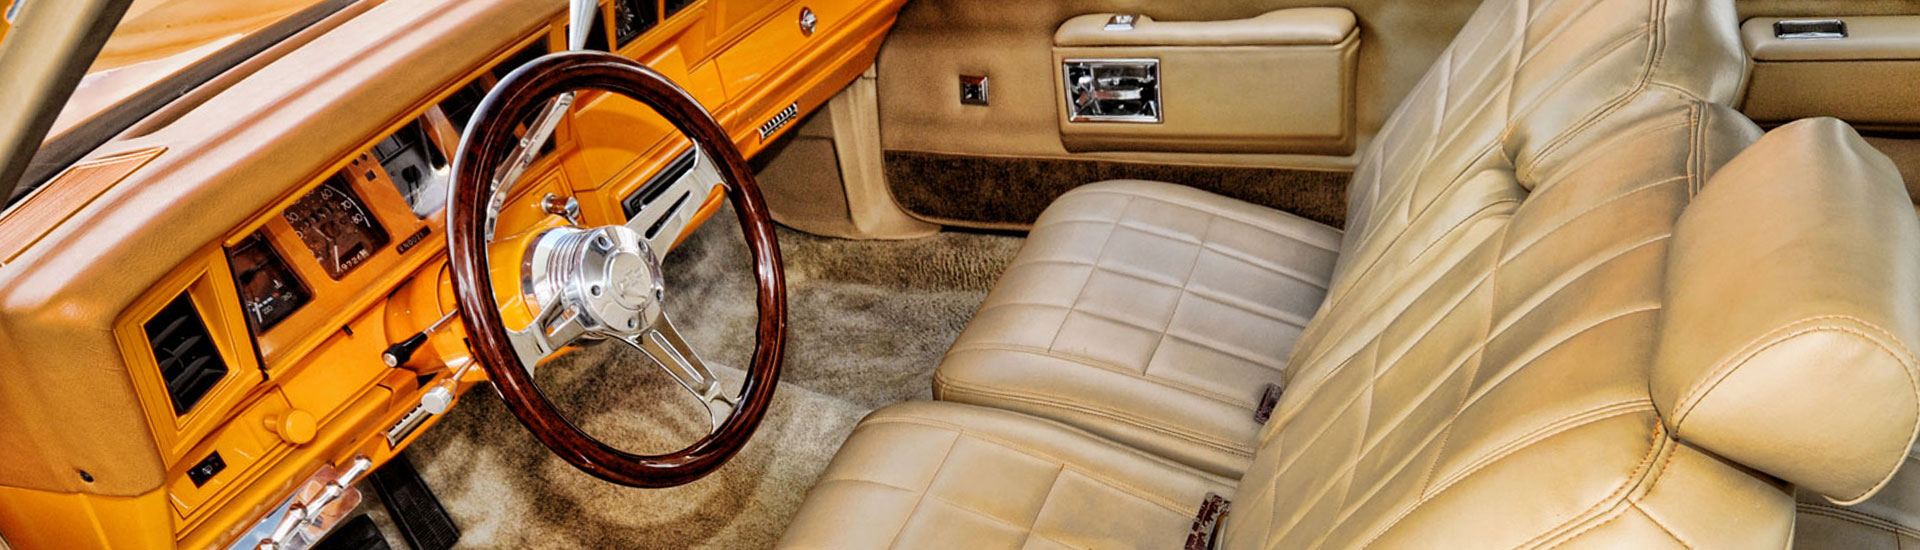 1985 Chevrolet Caprice Dash Kits